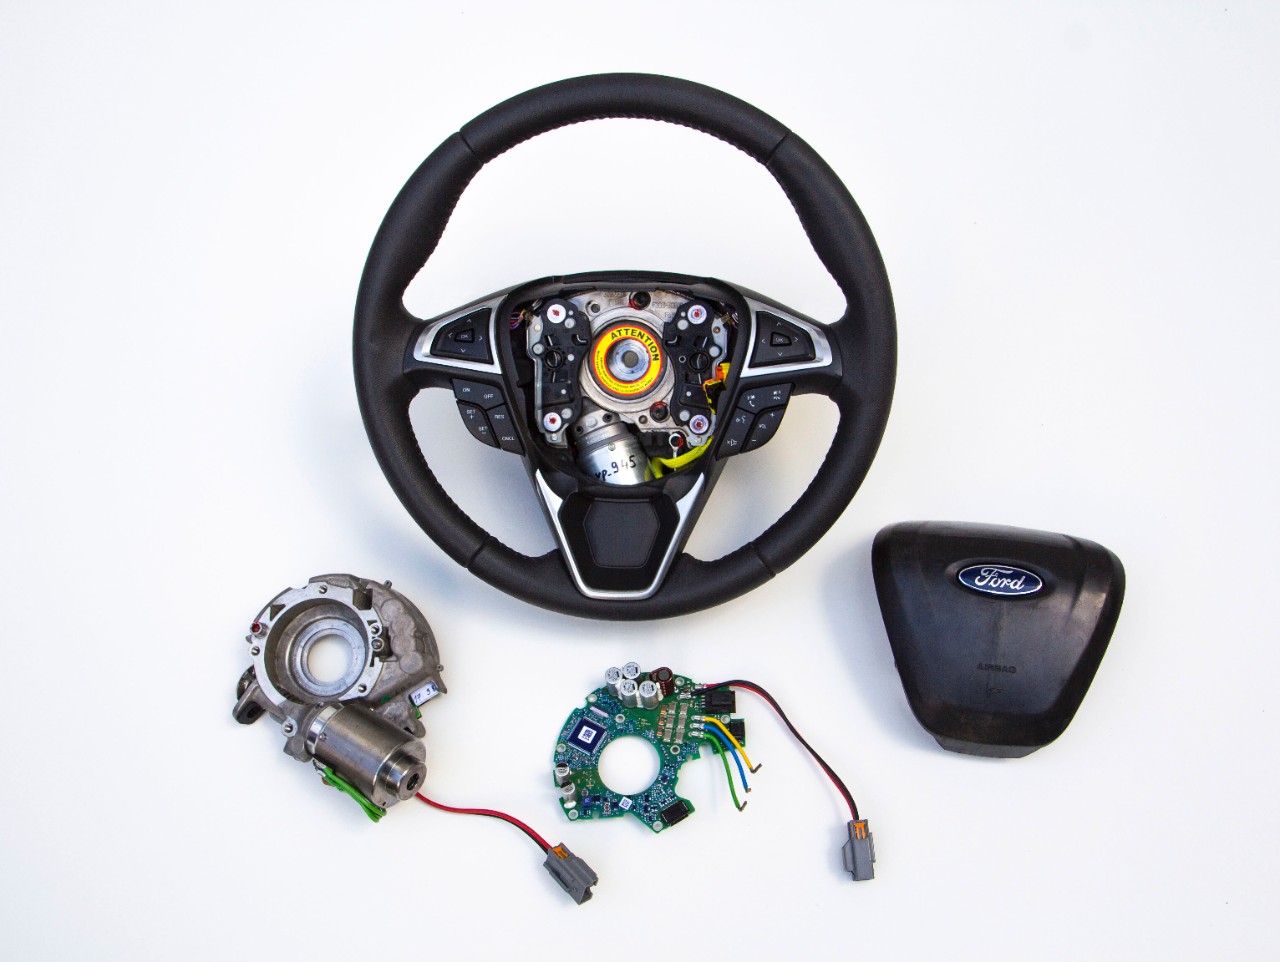 Ford adaptive steering mechanism